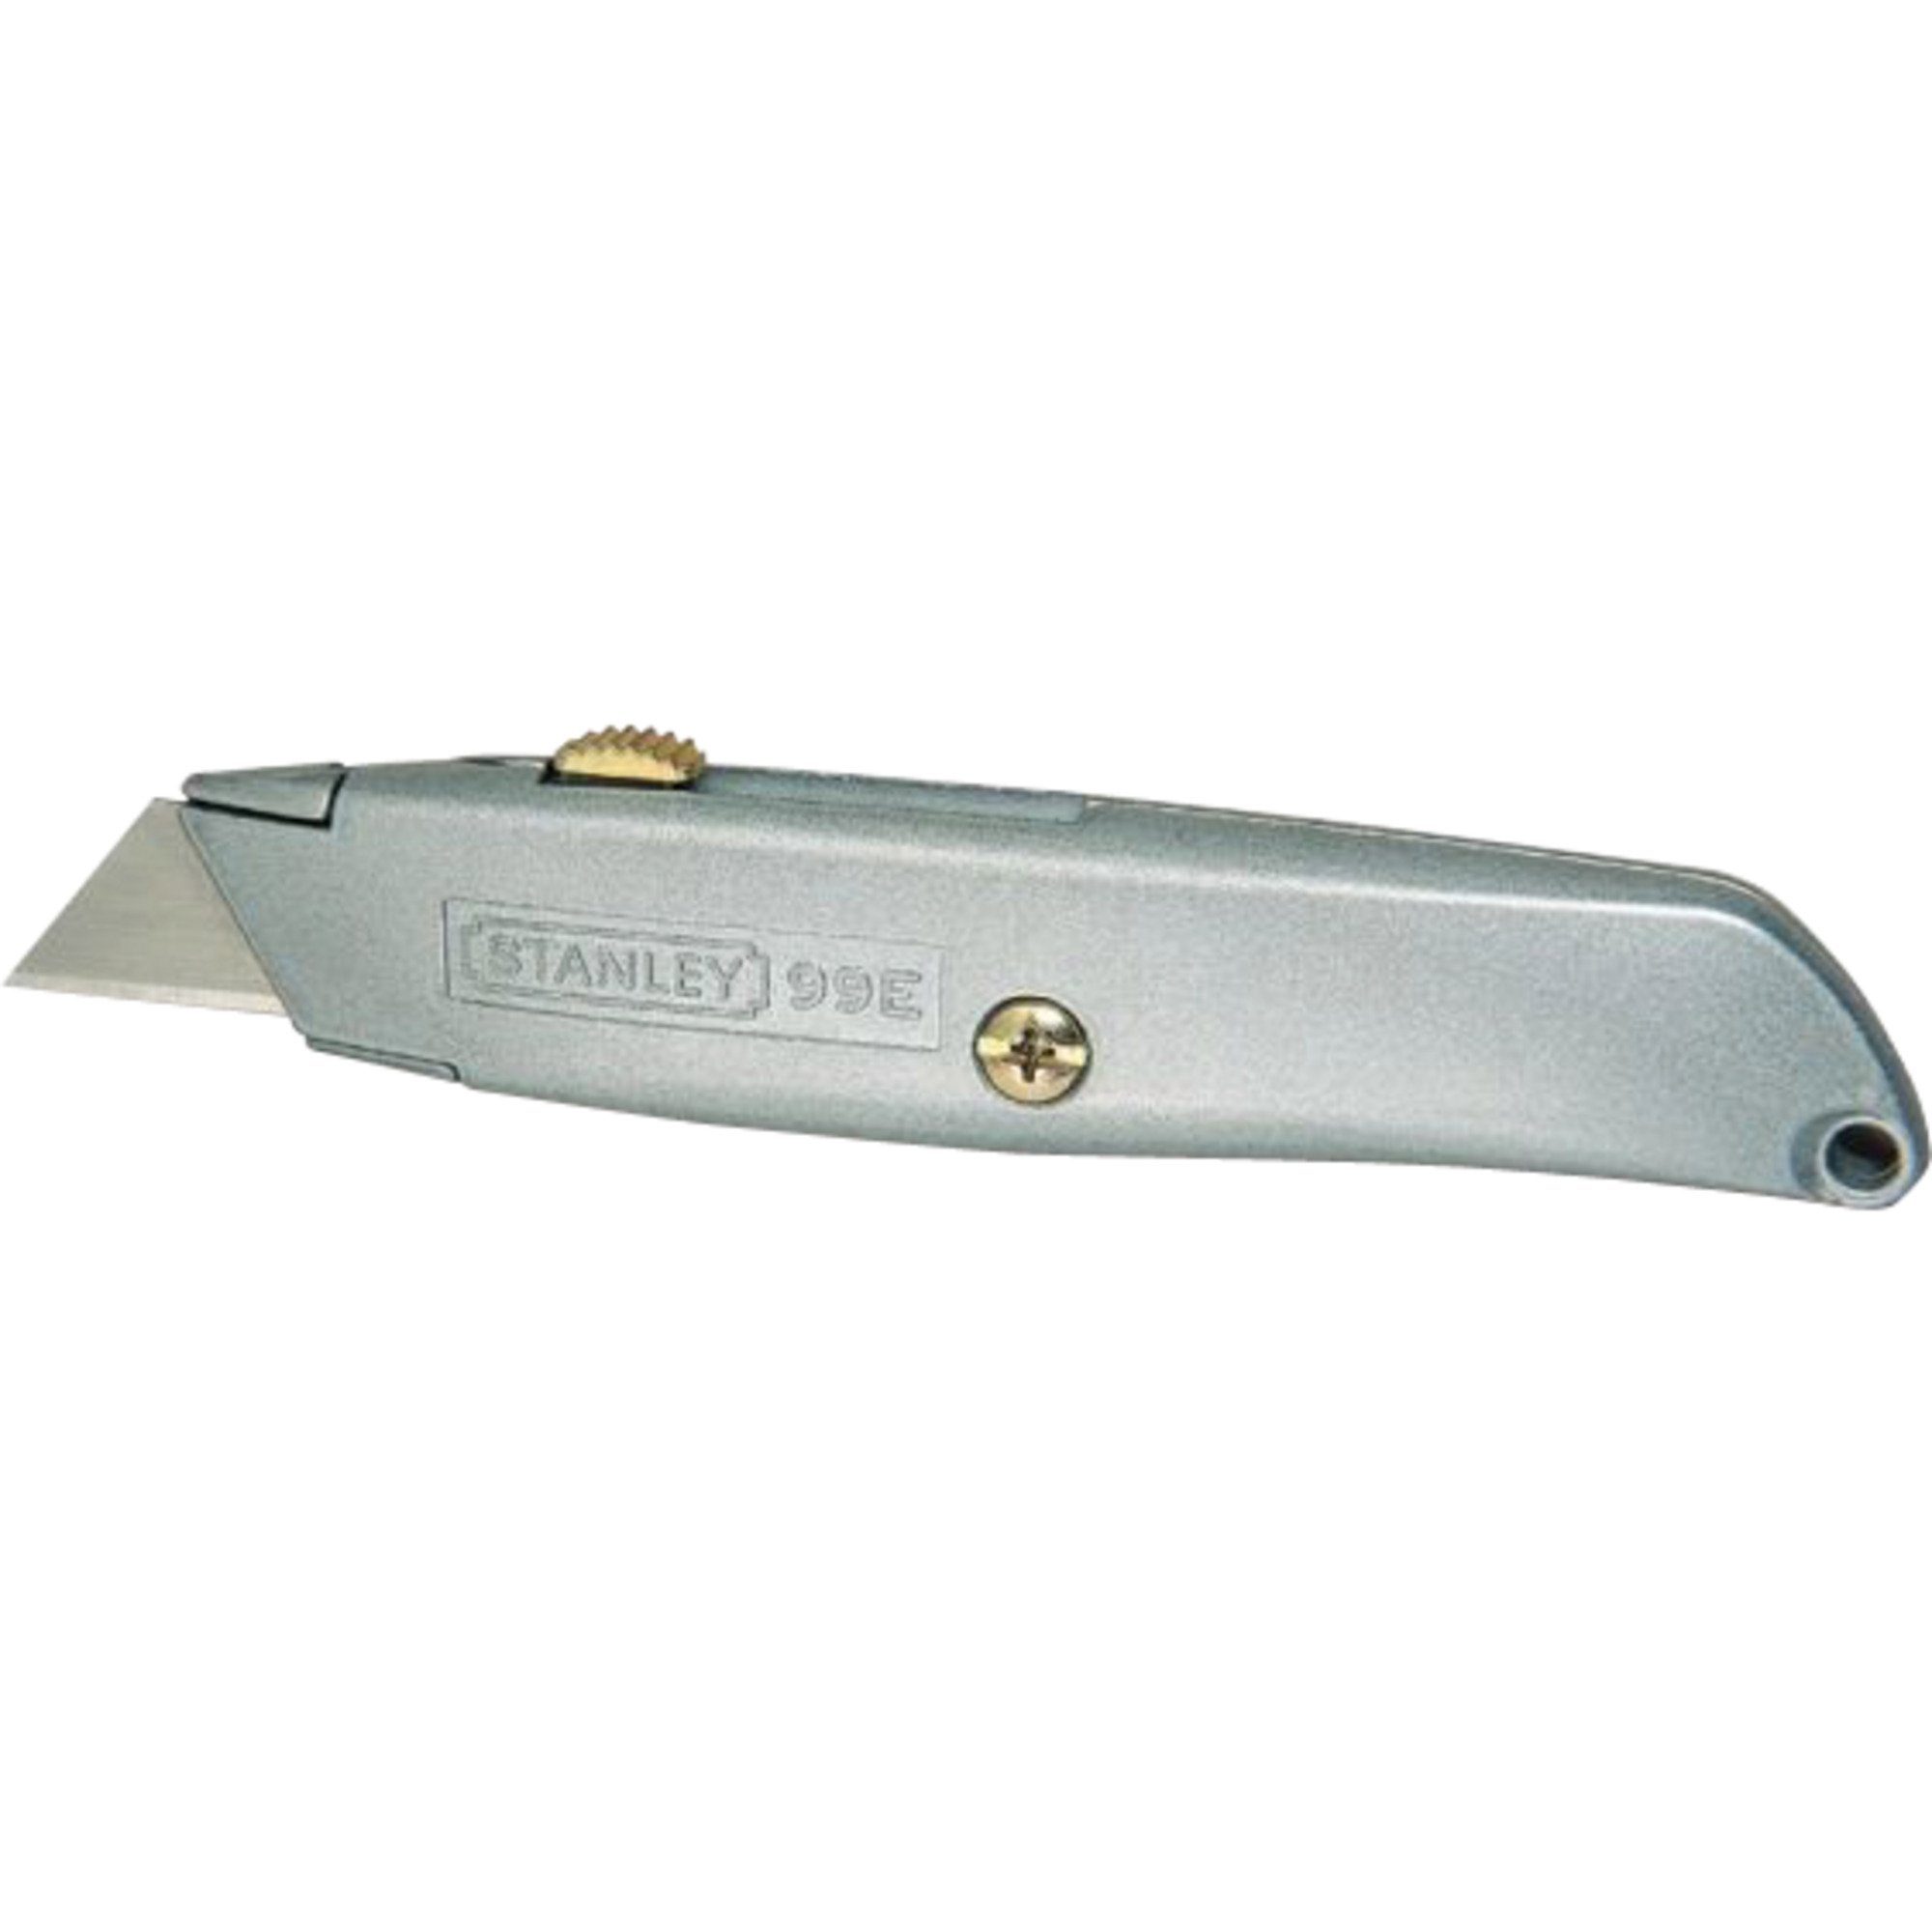 [Normaler Versandhandel im Laden] STANLEY Multitool Stanley Messer 99E, einziehbare Klinge